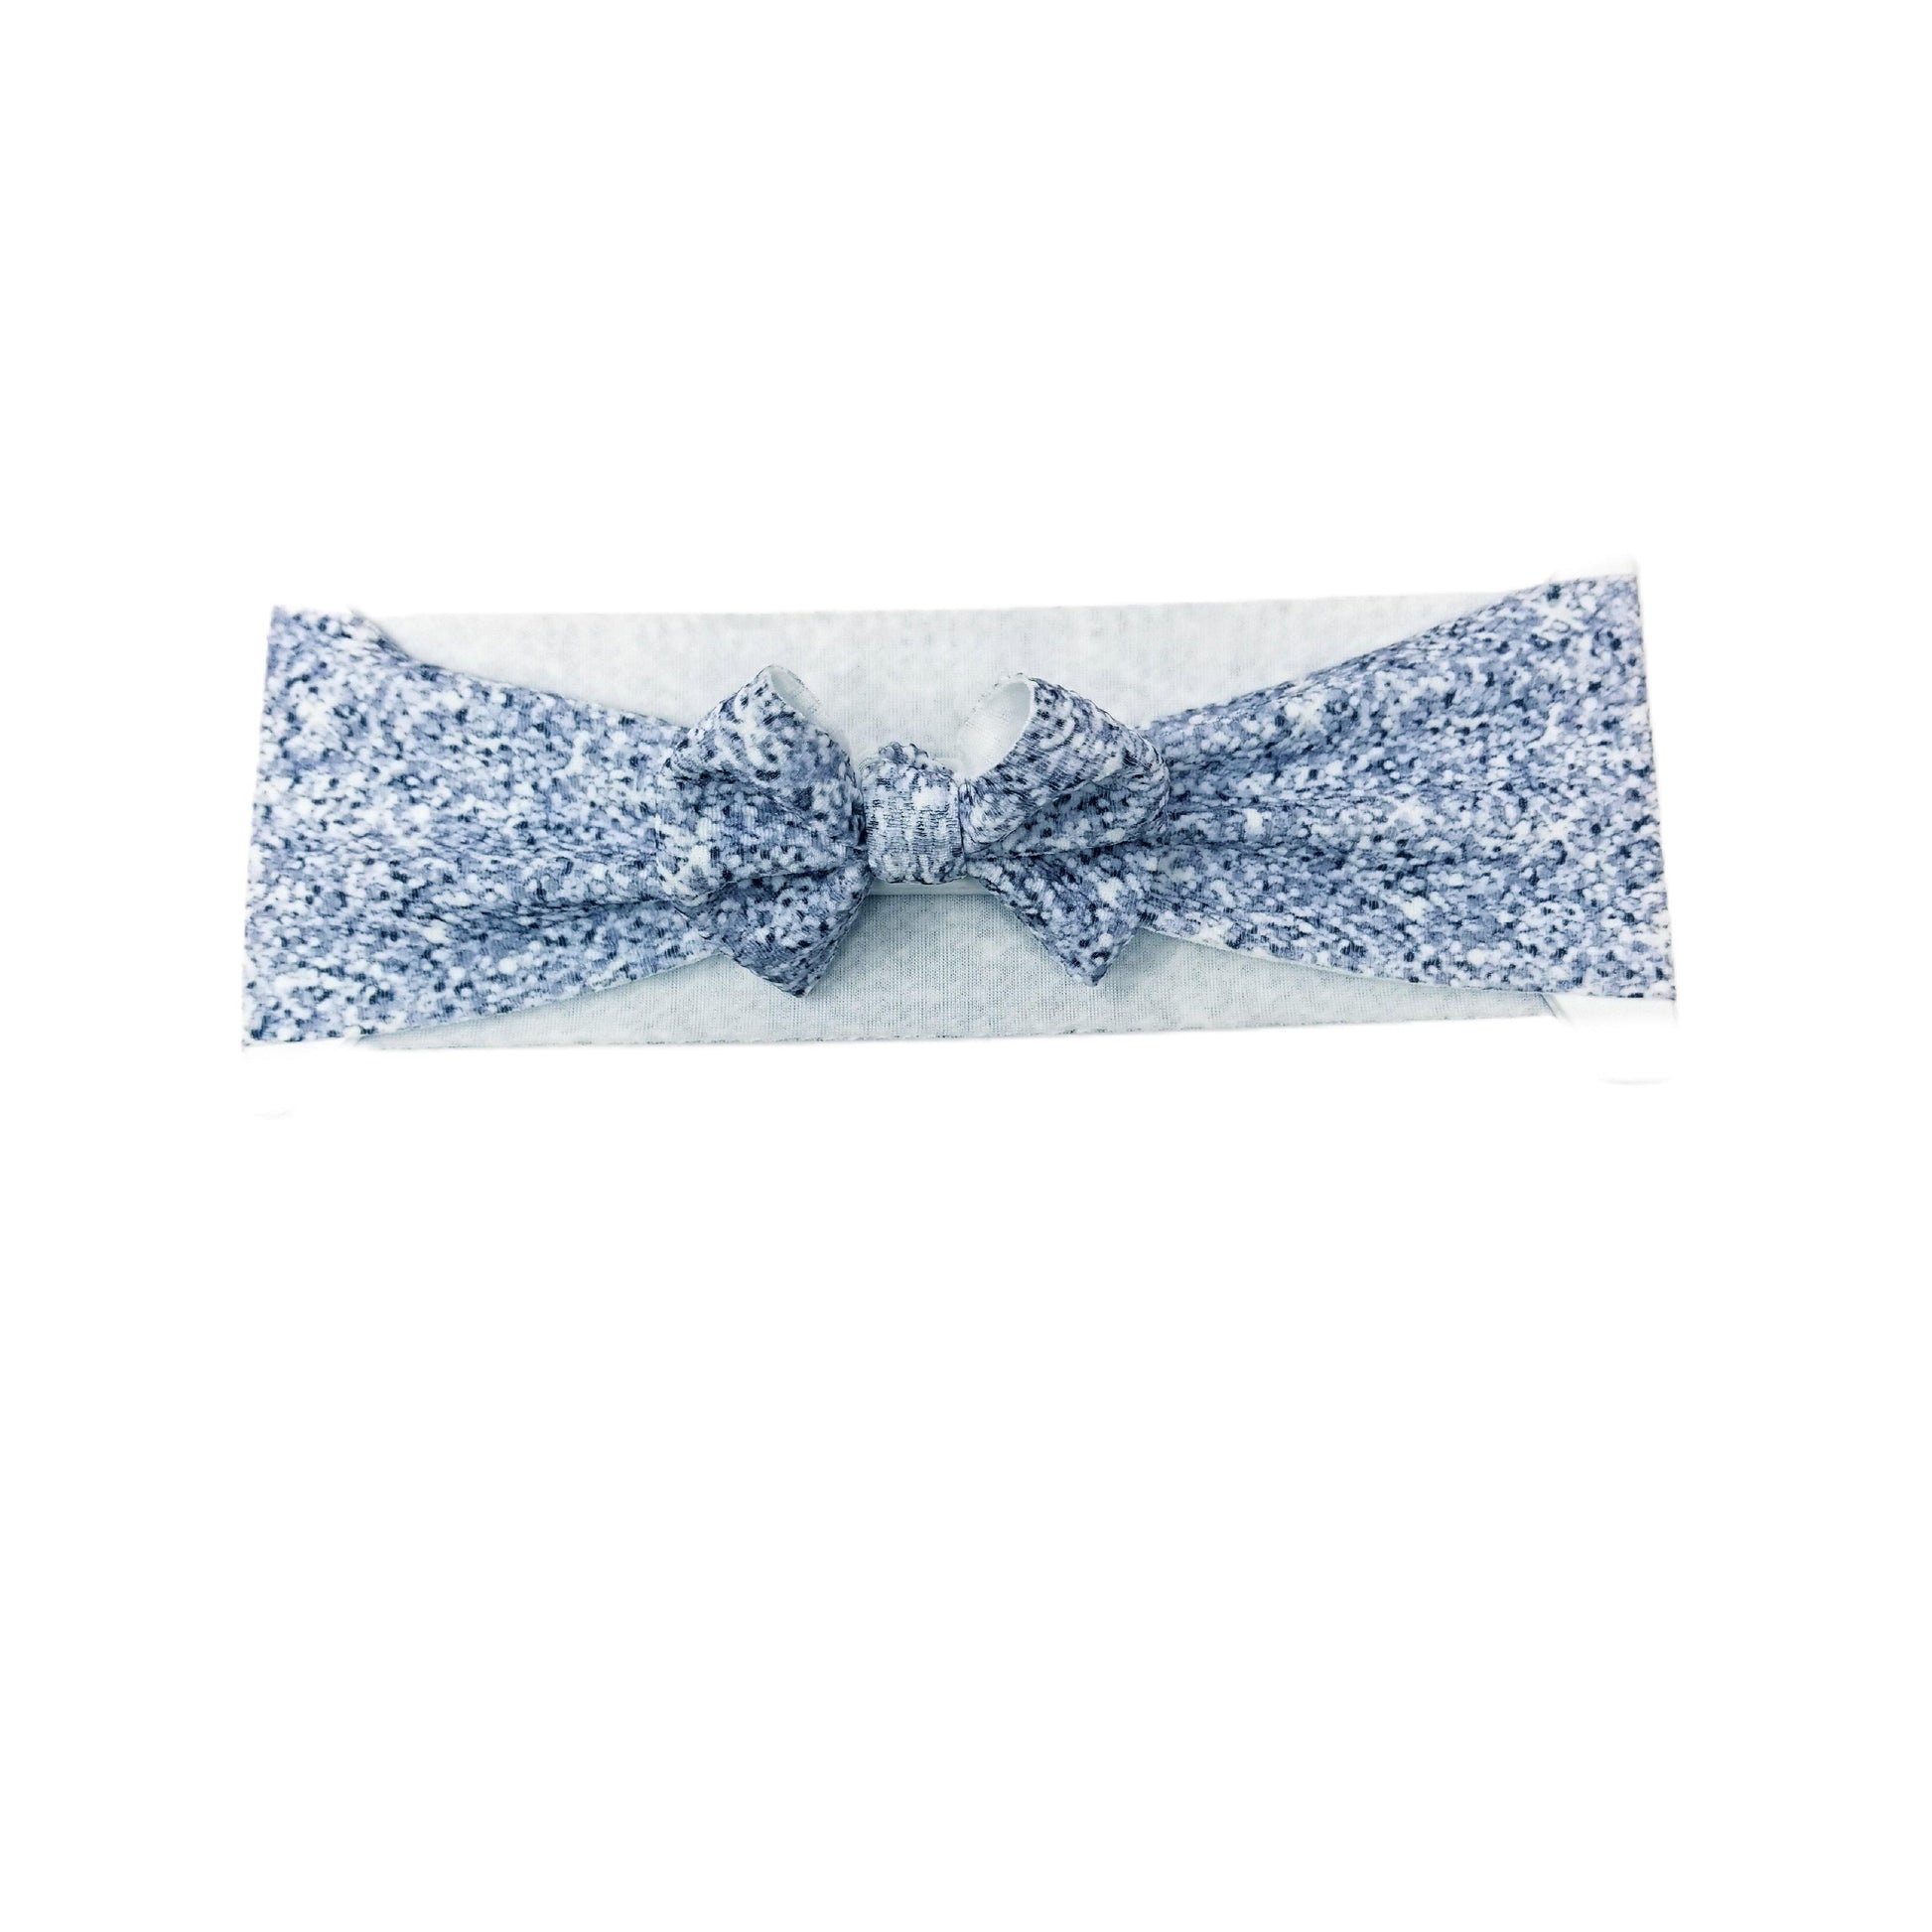 3 inch Silver Faux Glitter Fabric Bow Headwrap